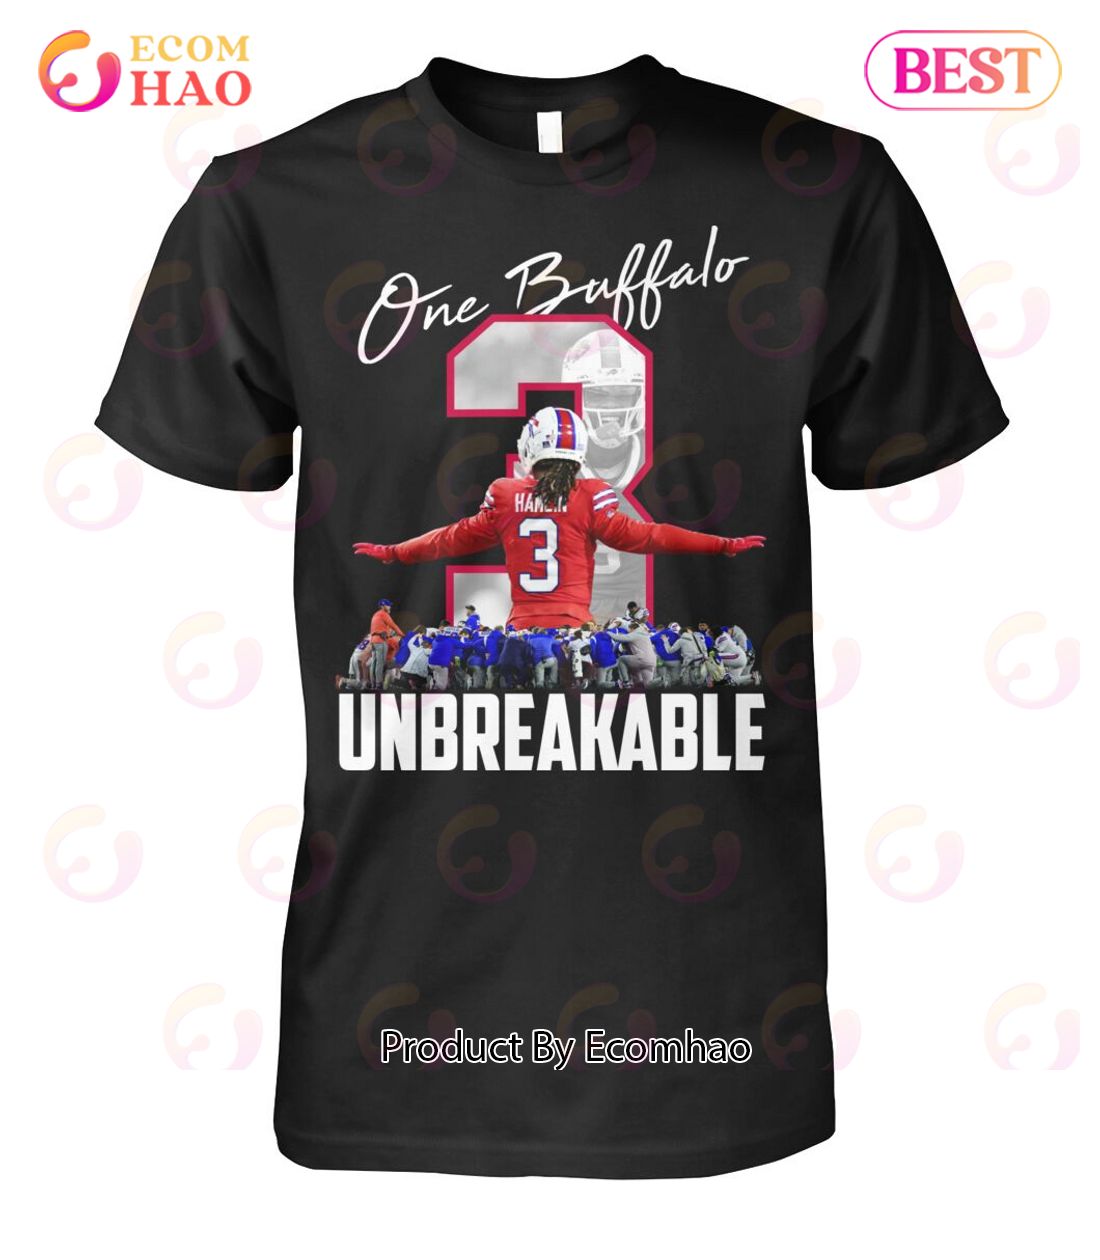 One Buffalo Hamlin #3 Unbreakable T-Shirt